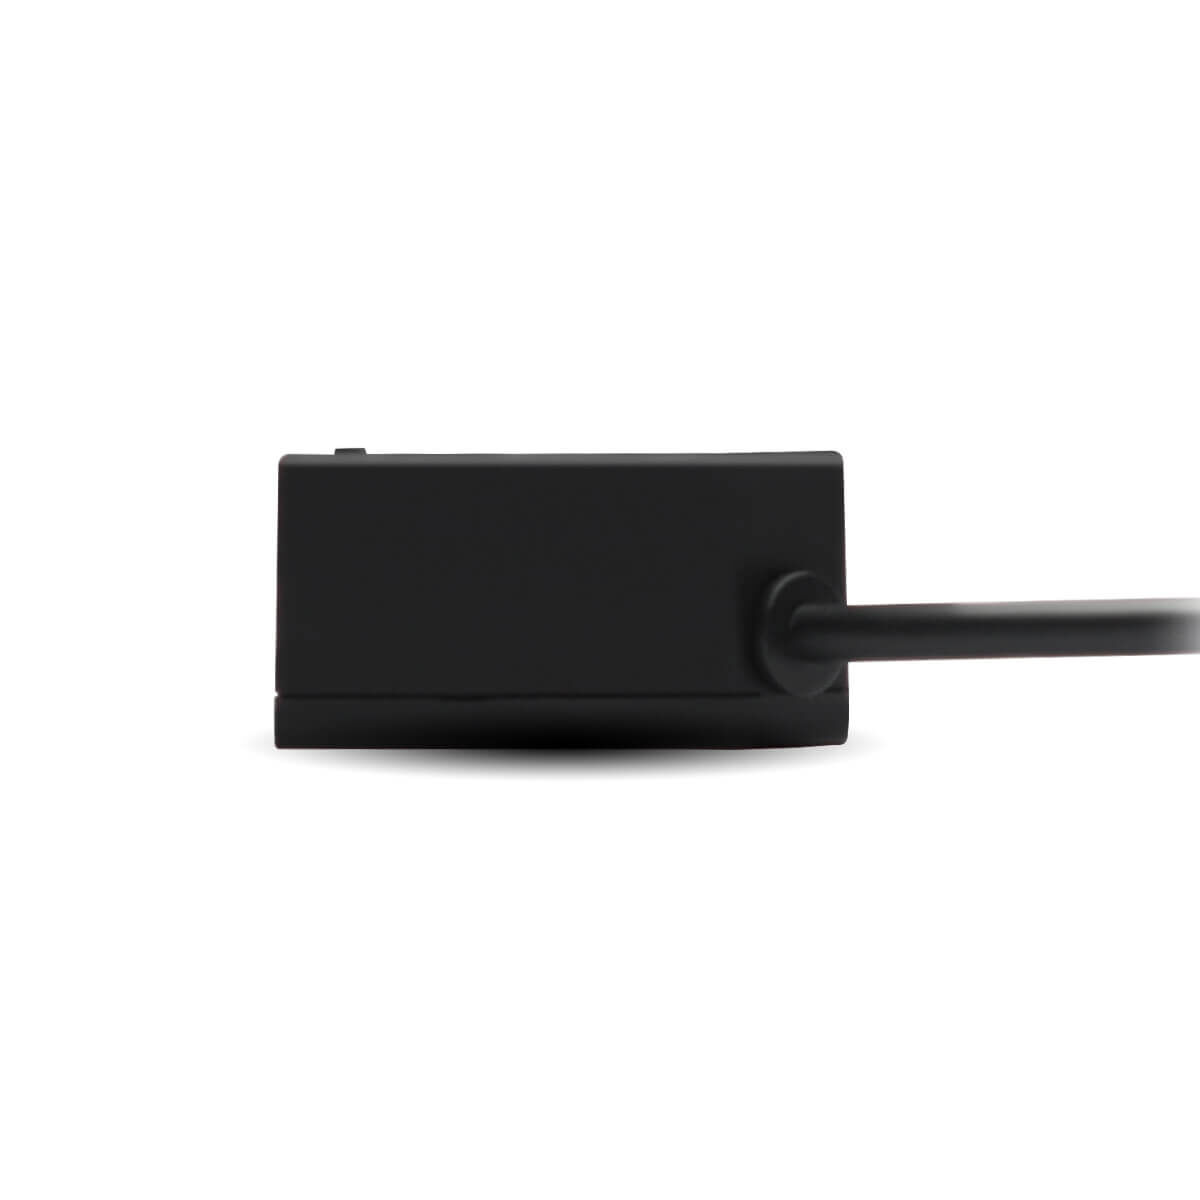 Сканер штрих-кода MERTECH N200 P2D USB, USB эмуляция RS232, черный Mertech (Mercury)